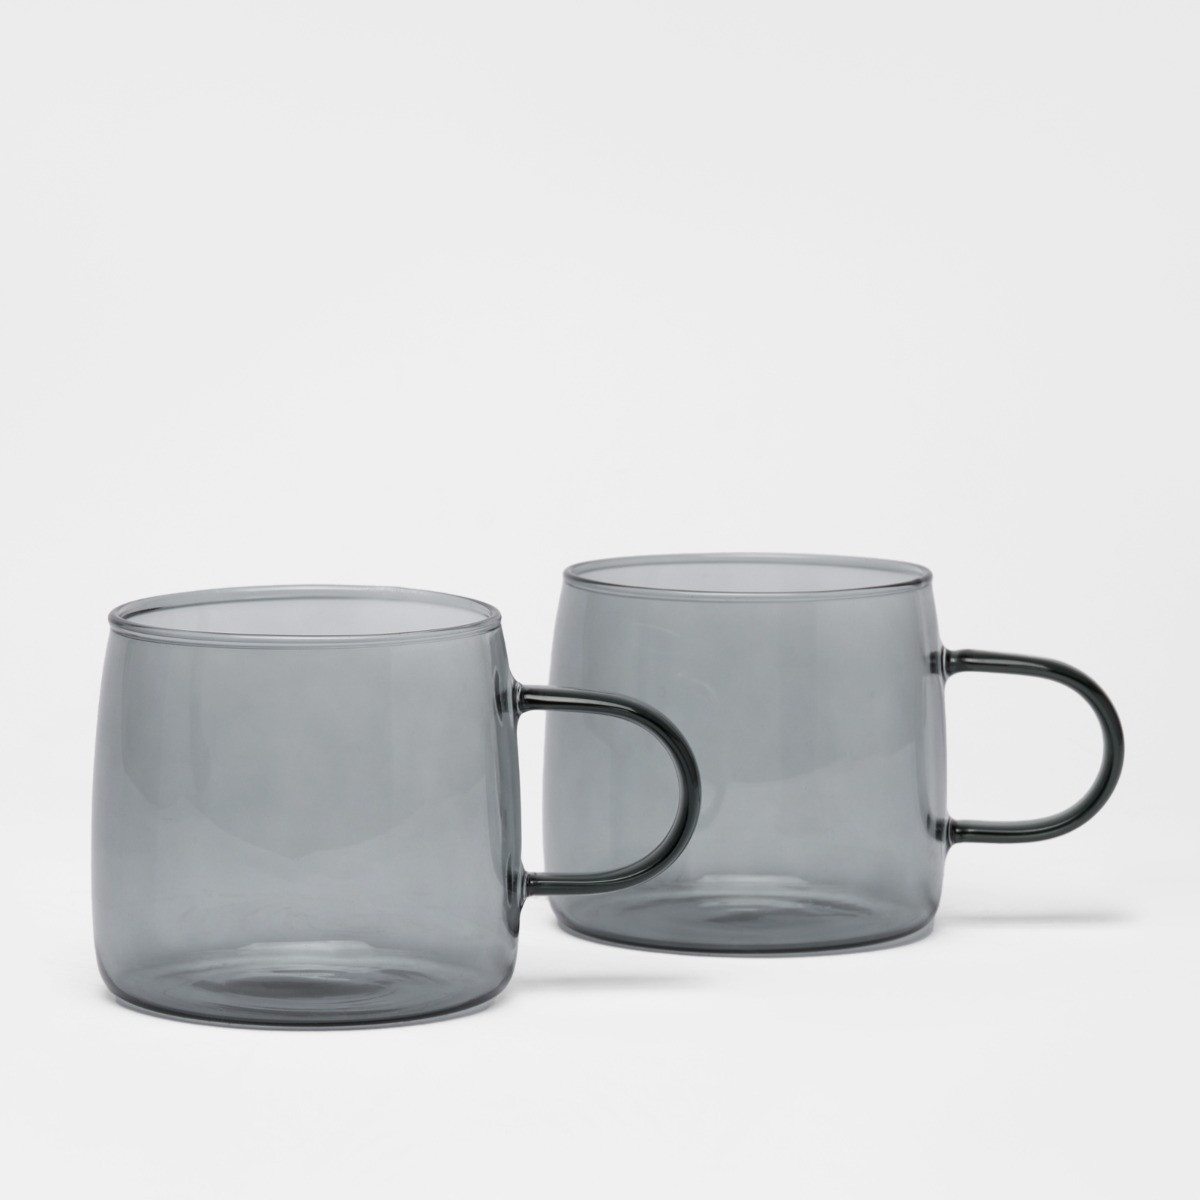 OHS Glass Mug, Grey - Set of 2>